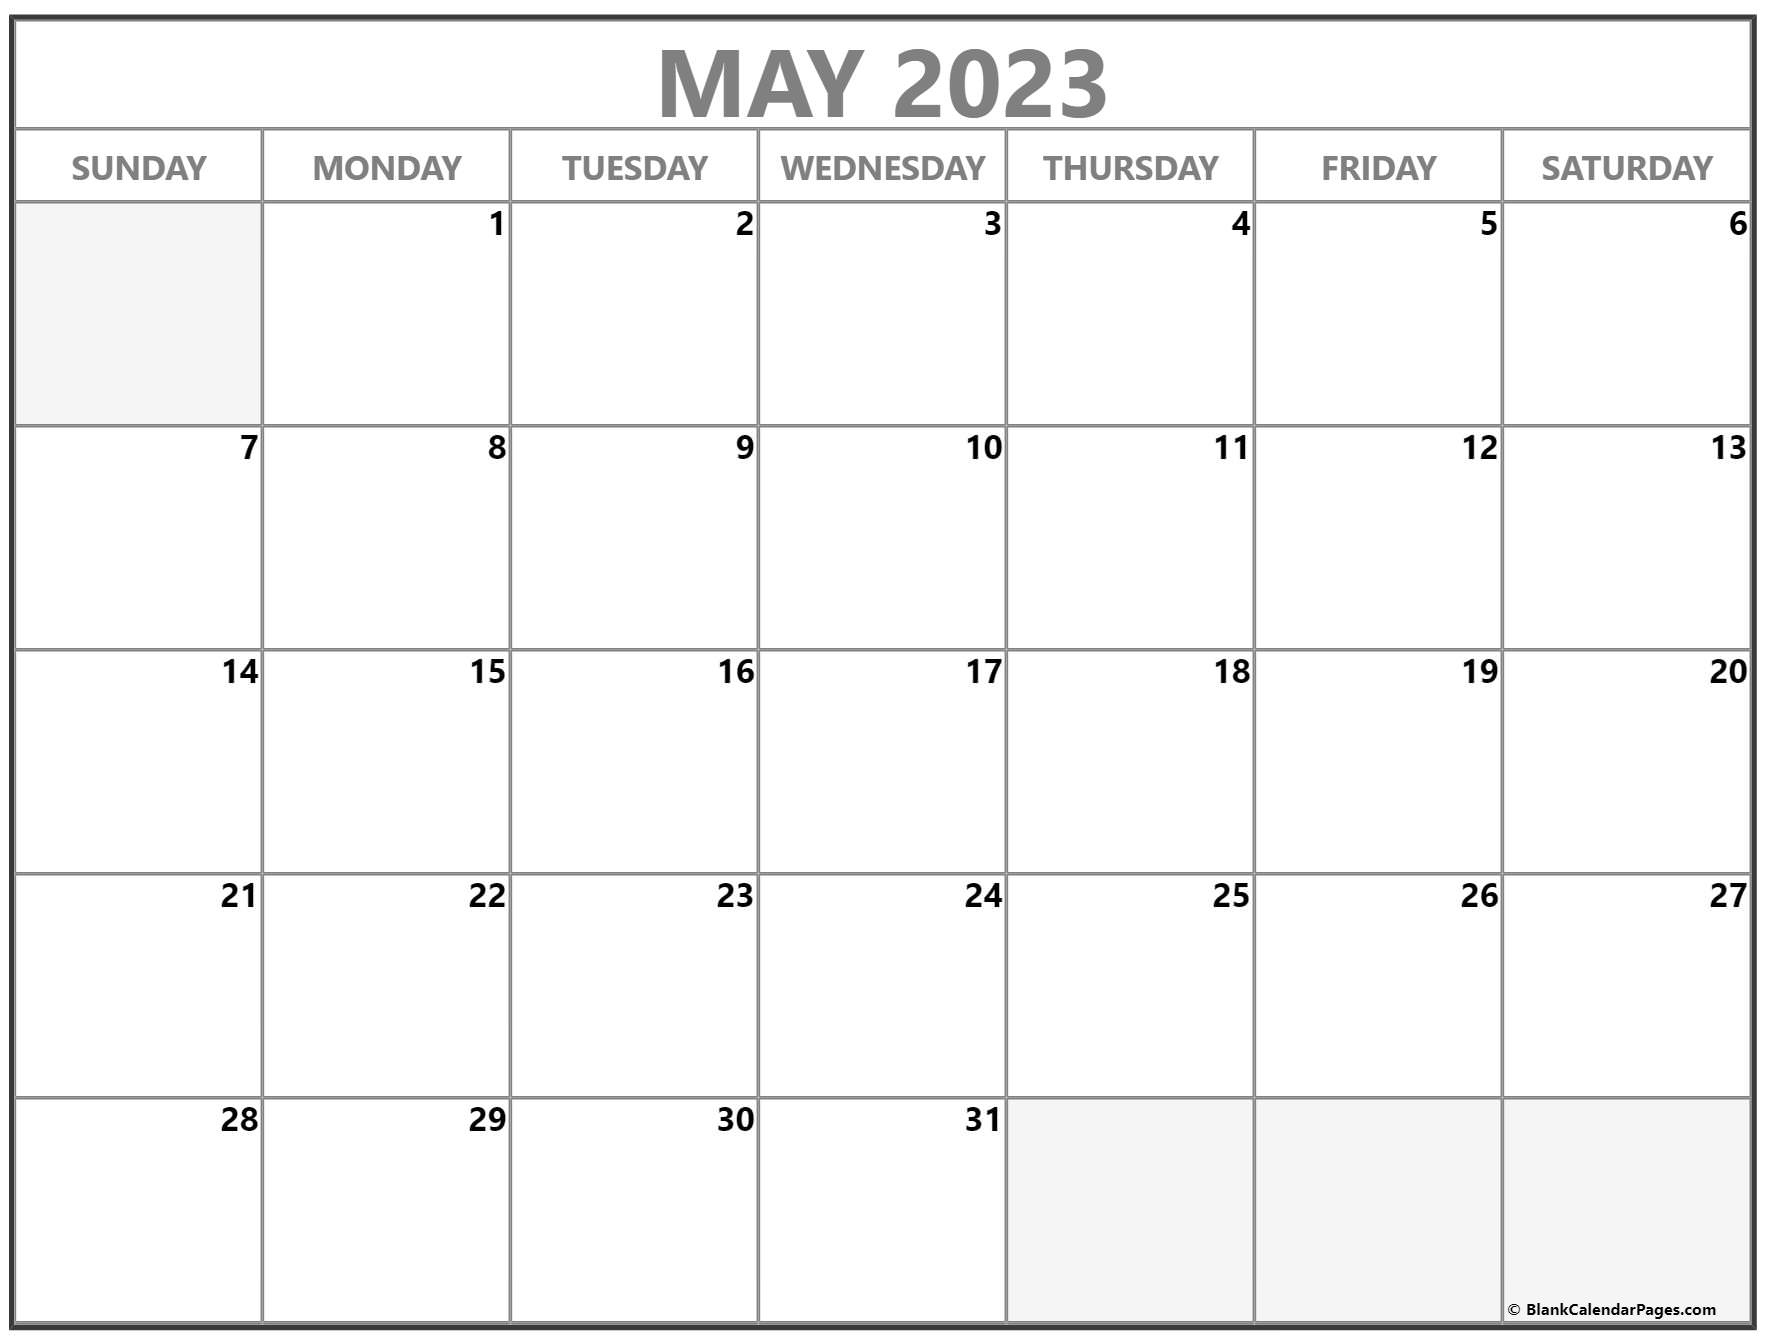 free-blank-fre-calendar-templates-for-may-2023-2022-freeblankcalendar